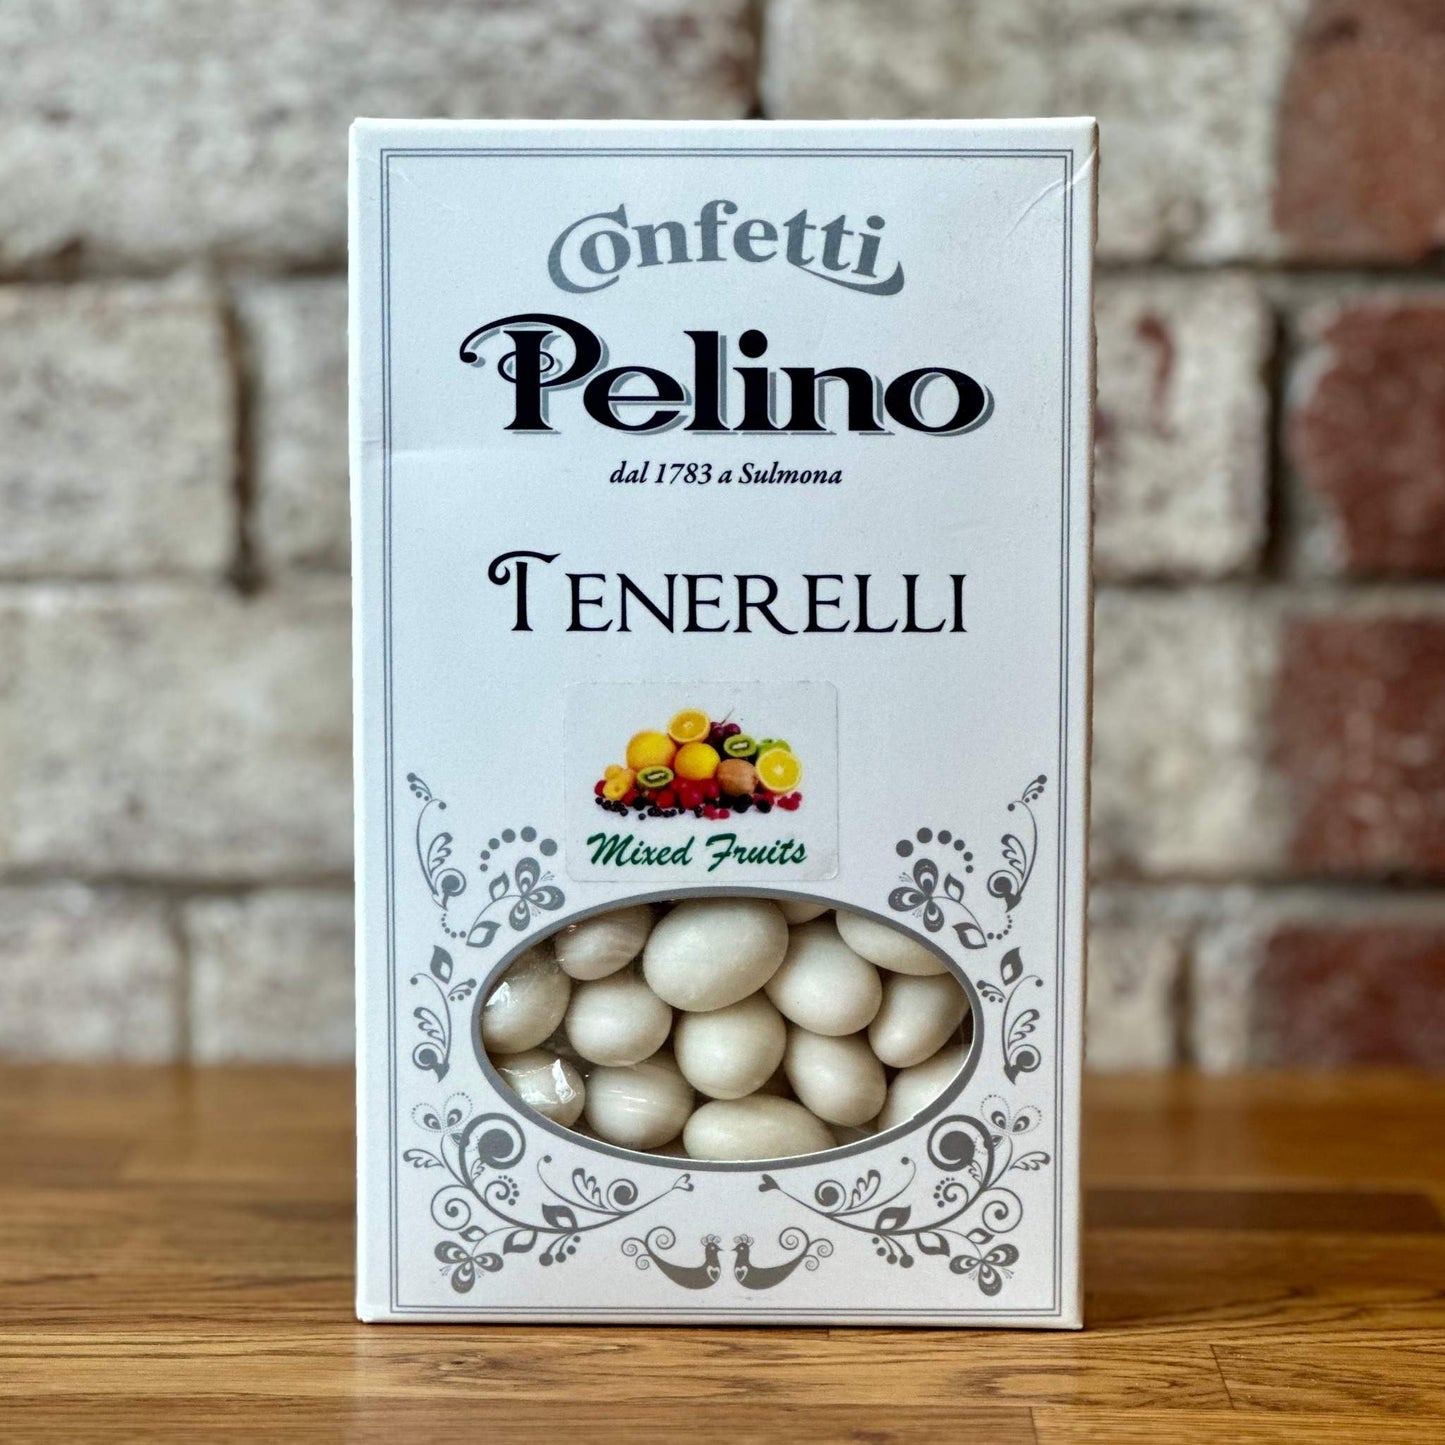 Mixed Fruits Tenerelli Pelino 500g - Confetti